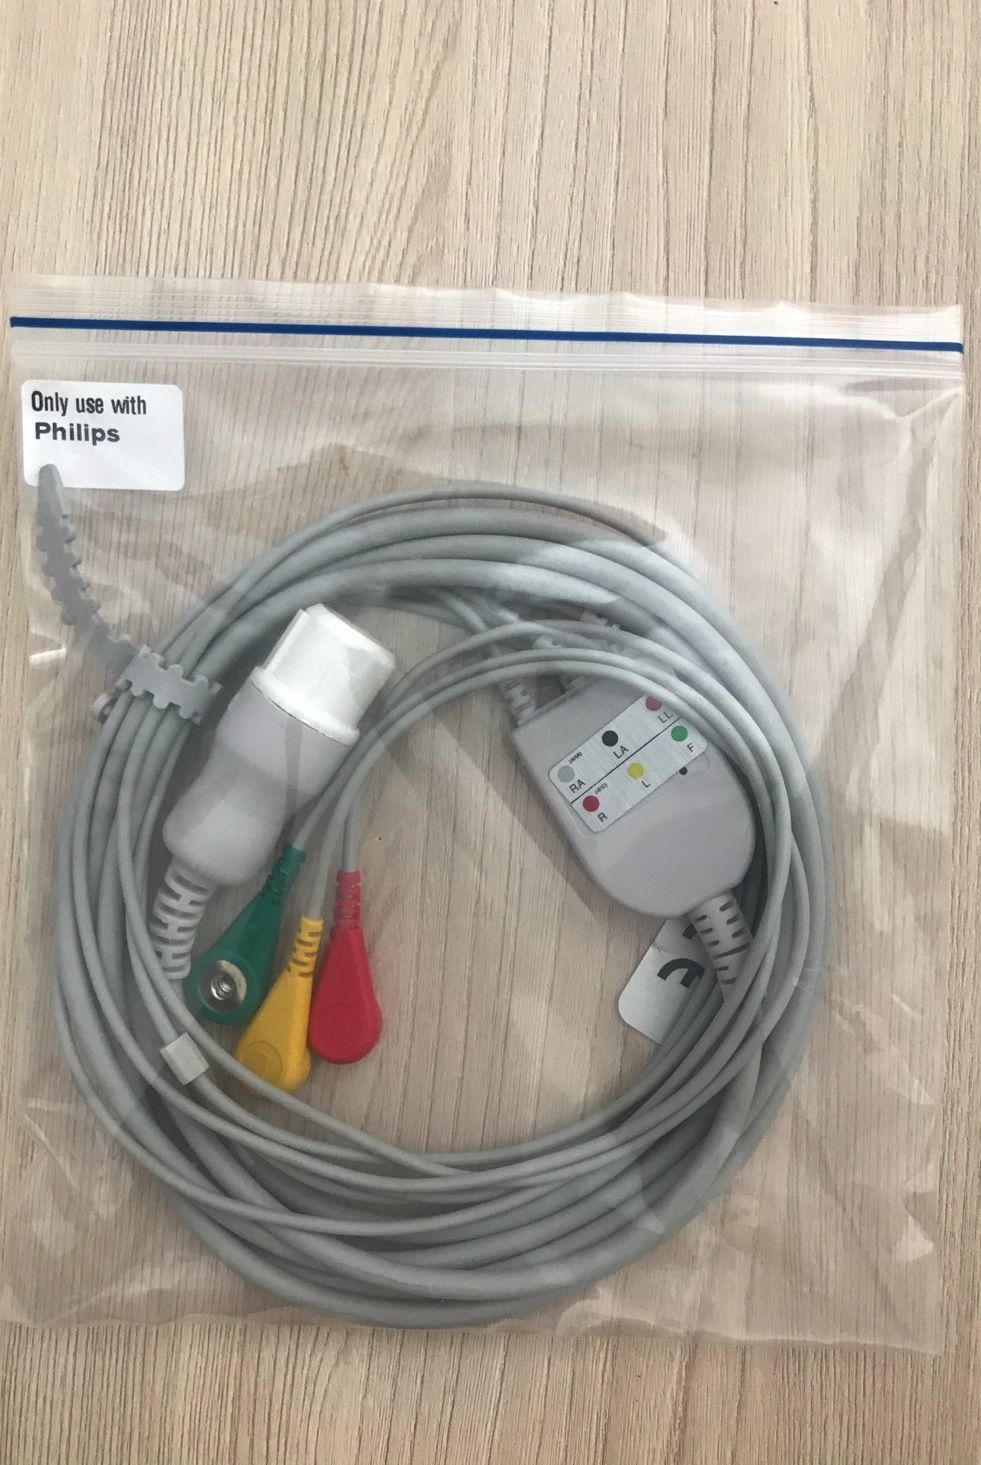 ECG Cable 3 Lead Snap IEC for Patient Monitor Philips_สายอีซีจีเคเบิ้ลแบบ 3 ลีดปลายกระดุมเครื่องมอนิเตอร์ผู้ป่วยฟิลิปส์